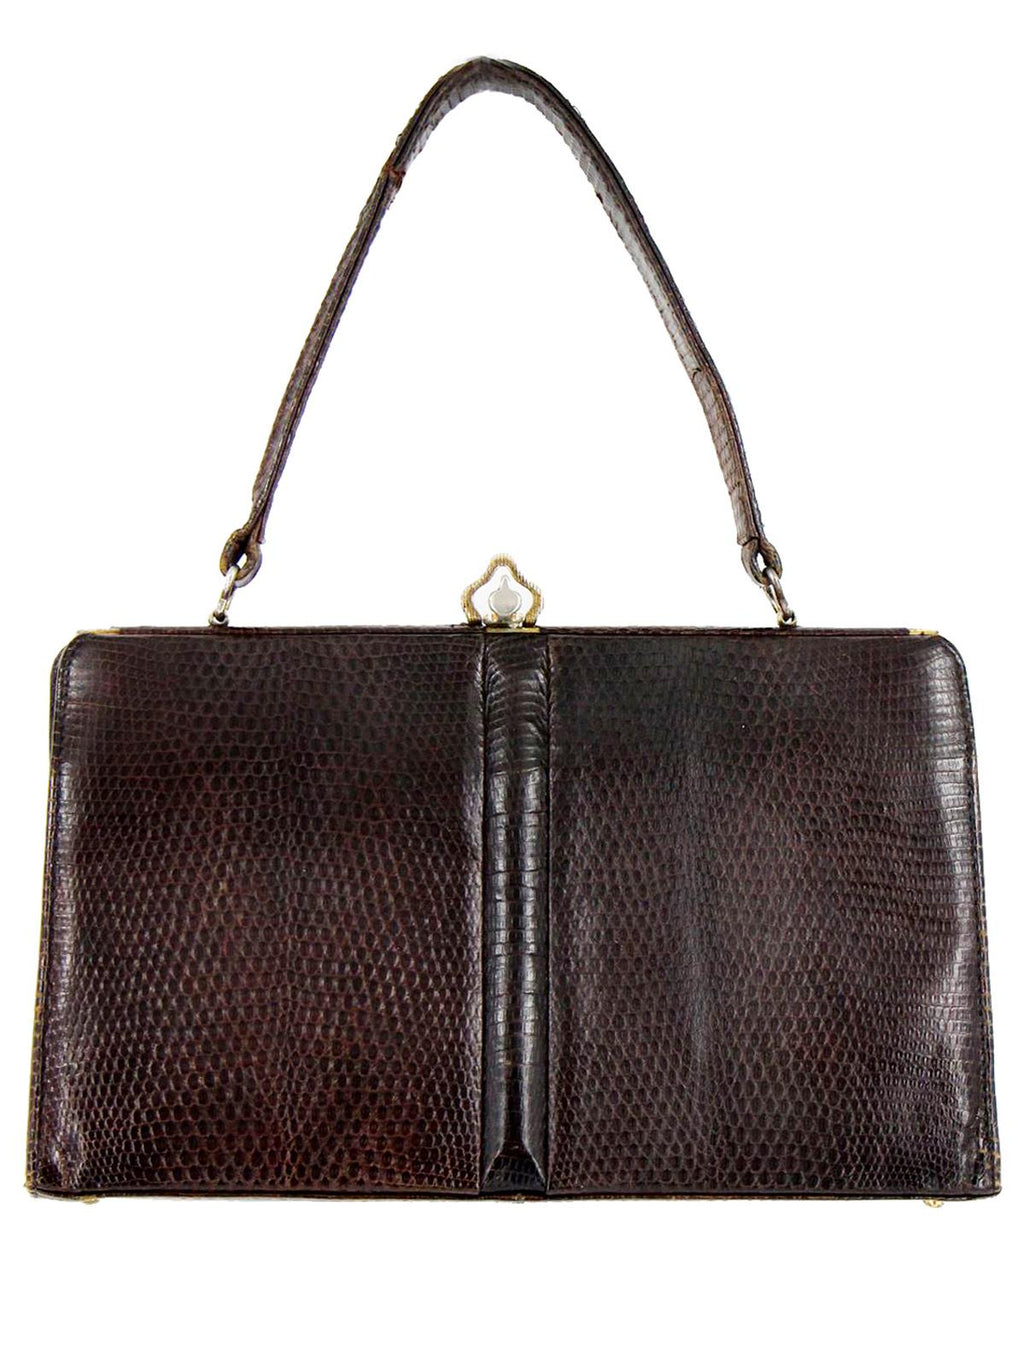 1940s Tan Crocodile Frame Handbag